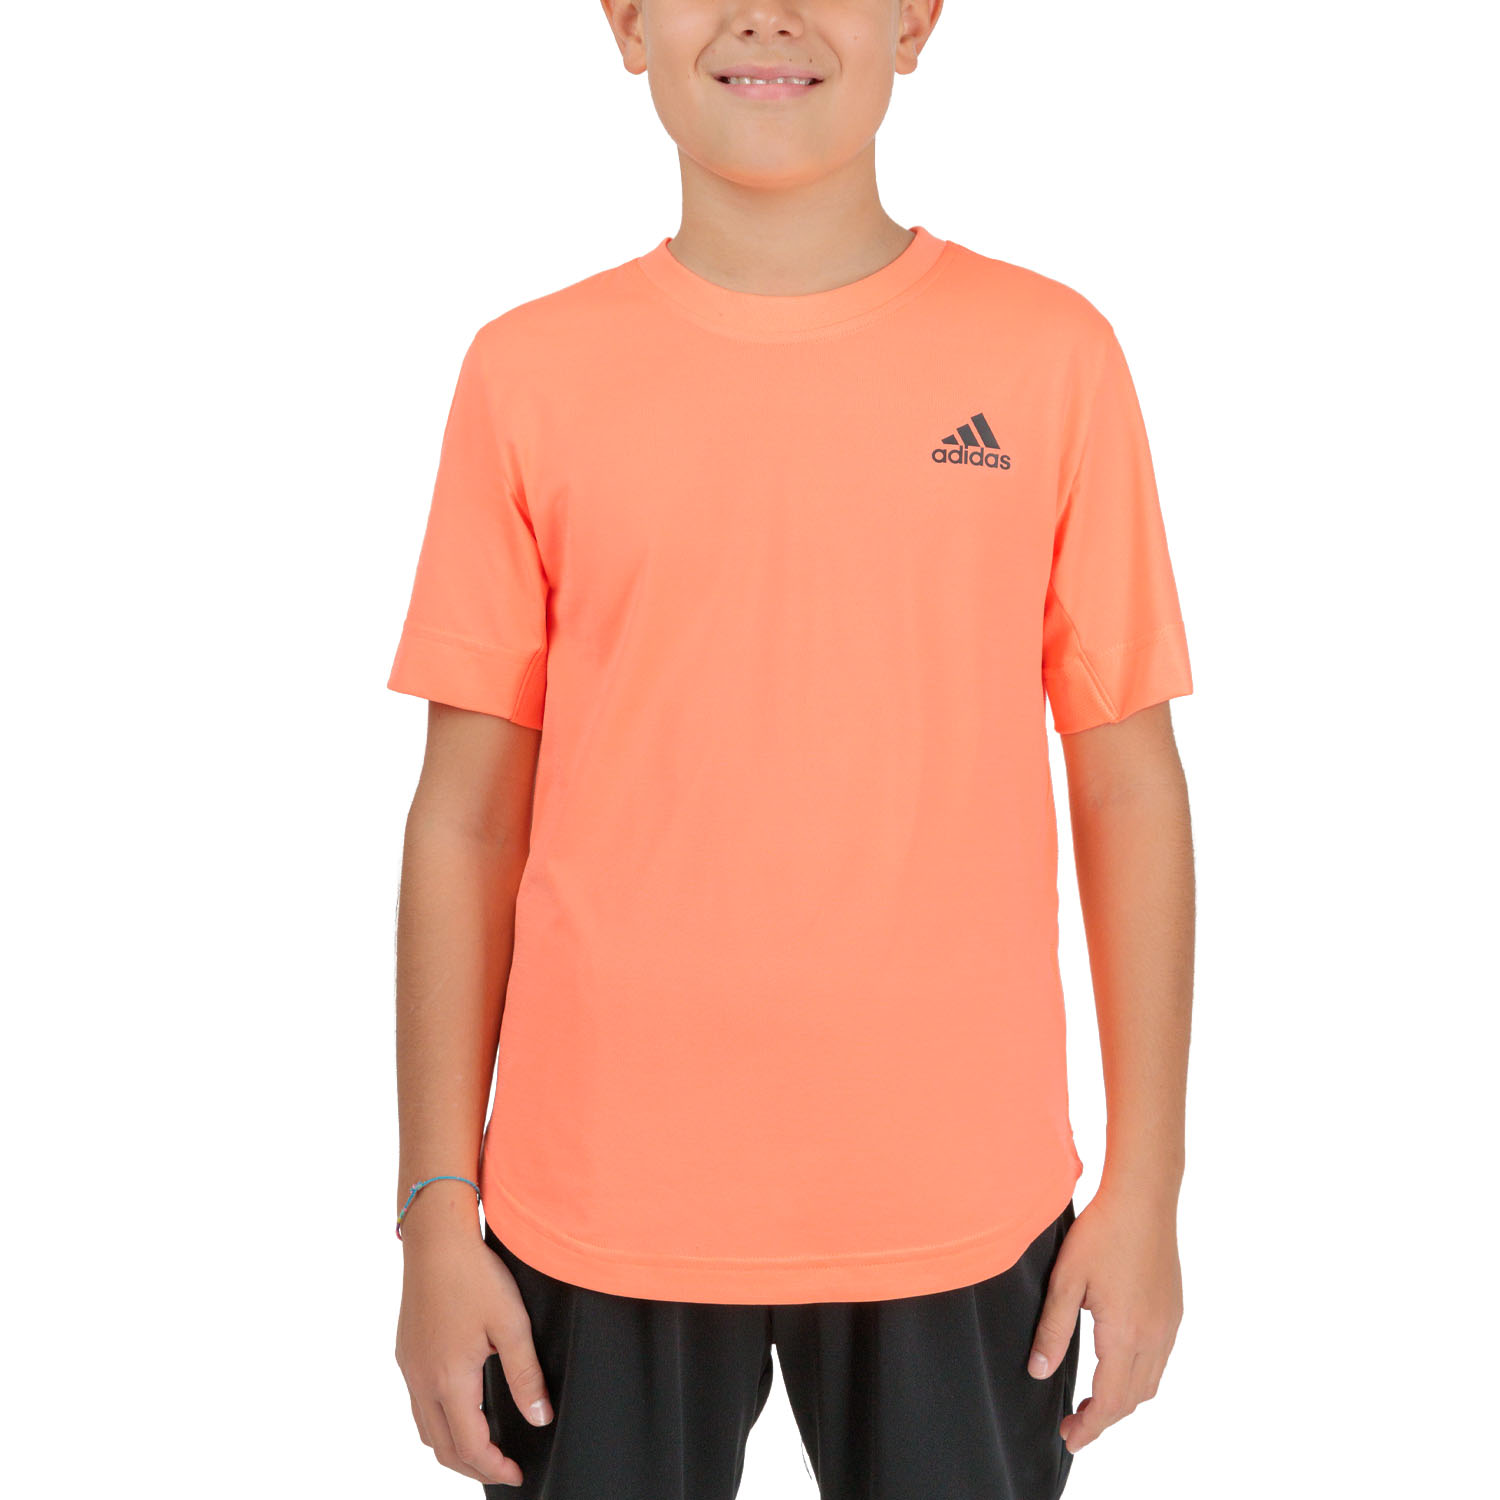 adidas New York Camiseta Niño - Beam Orange